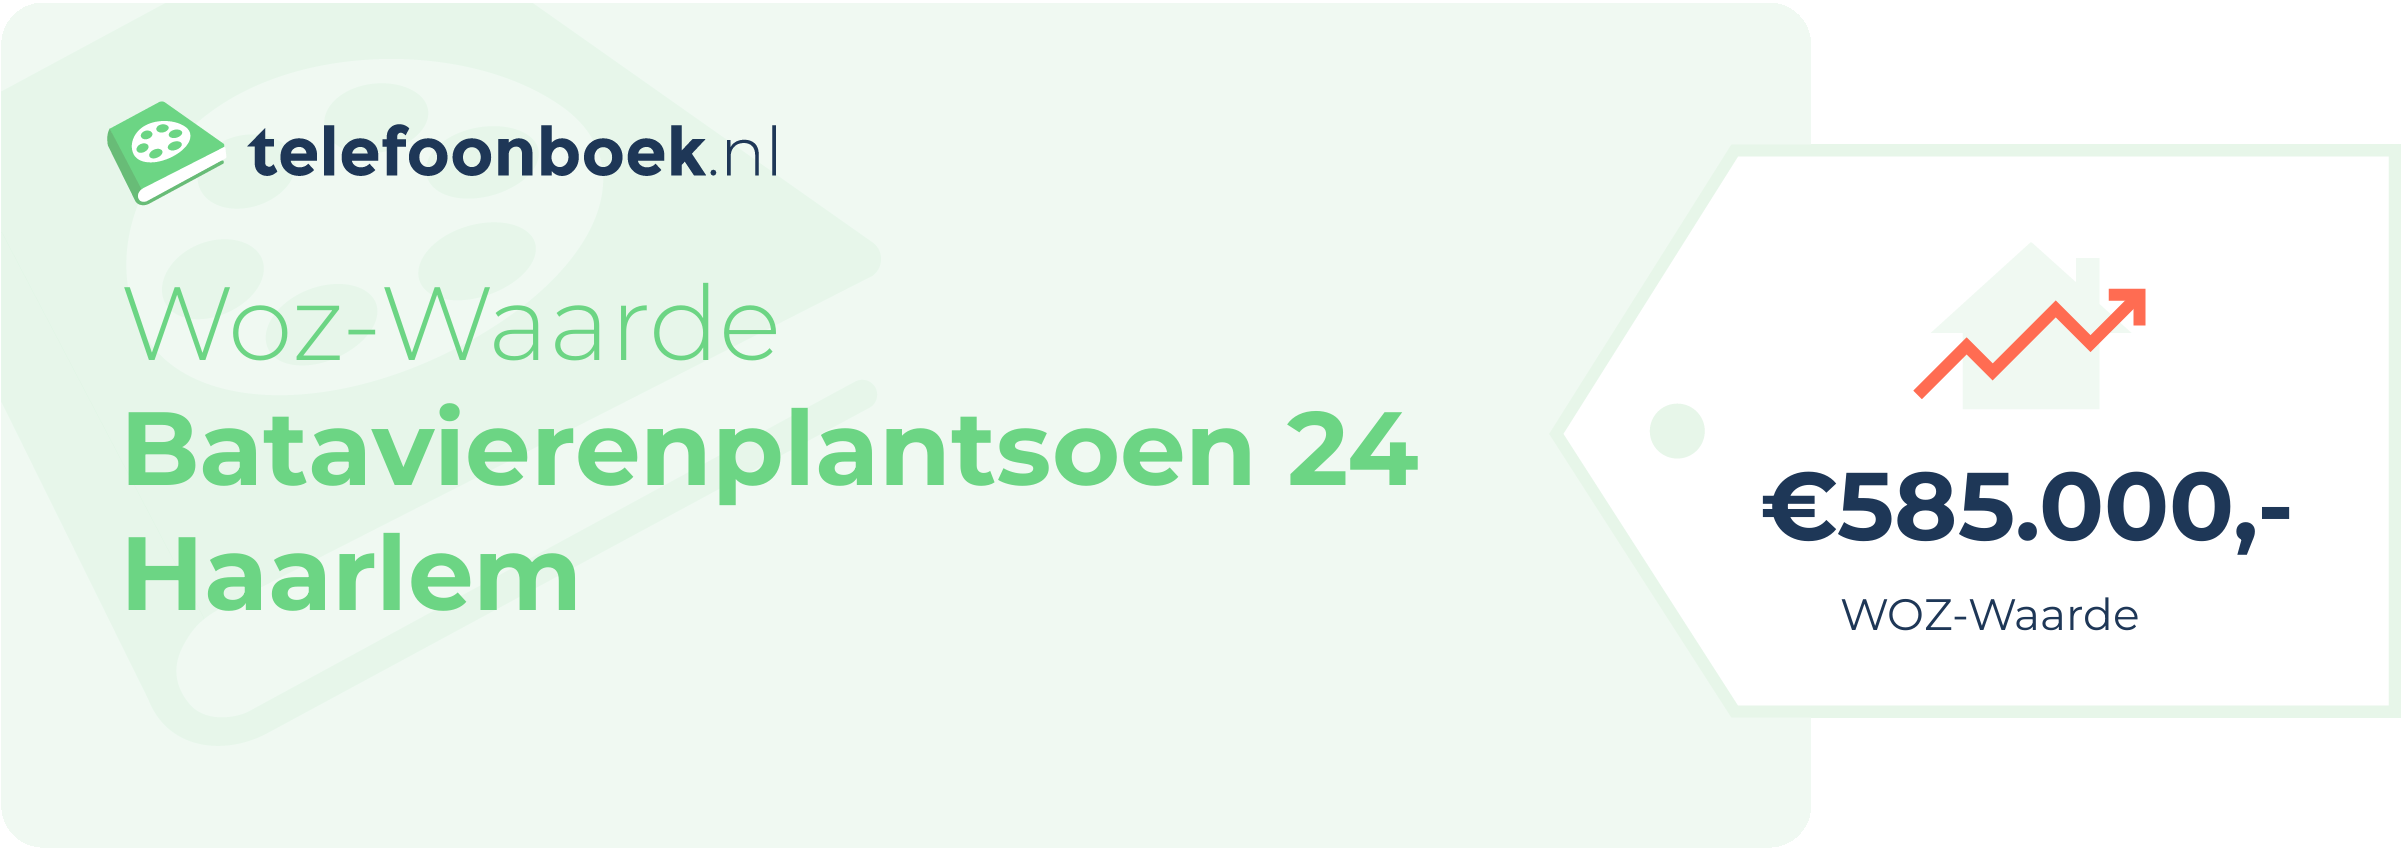 WOZ-waarde Batavierenplantsoen 24 Haarlem